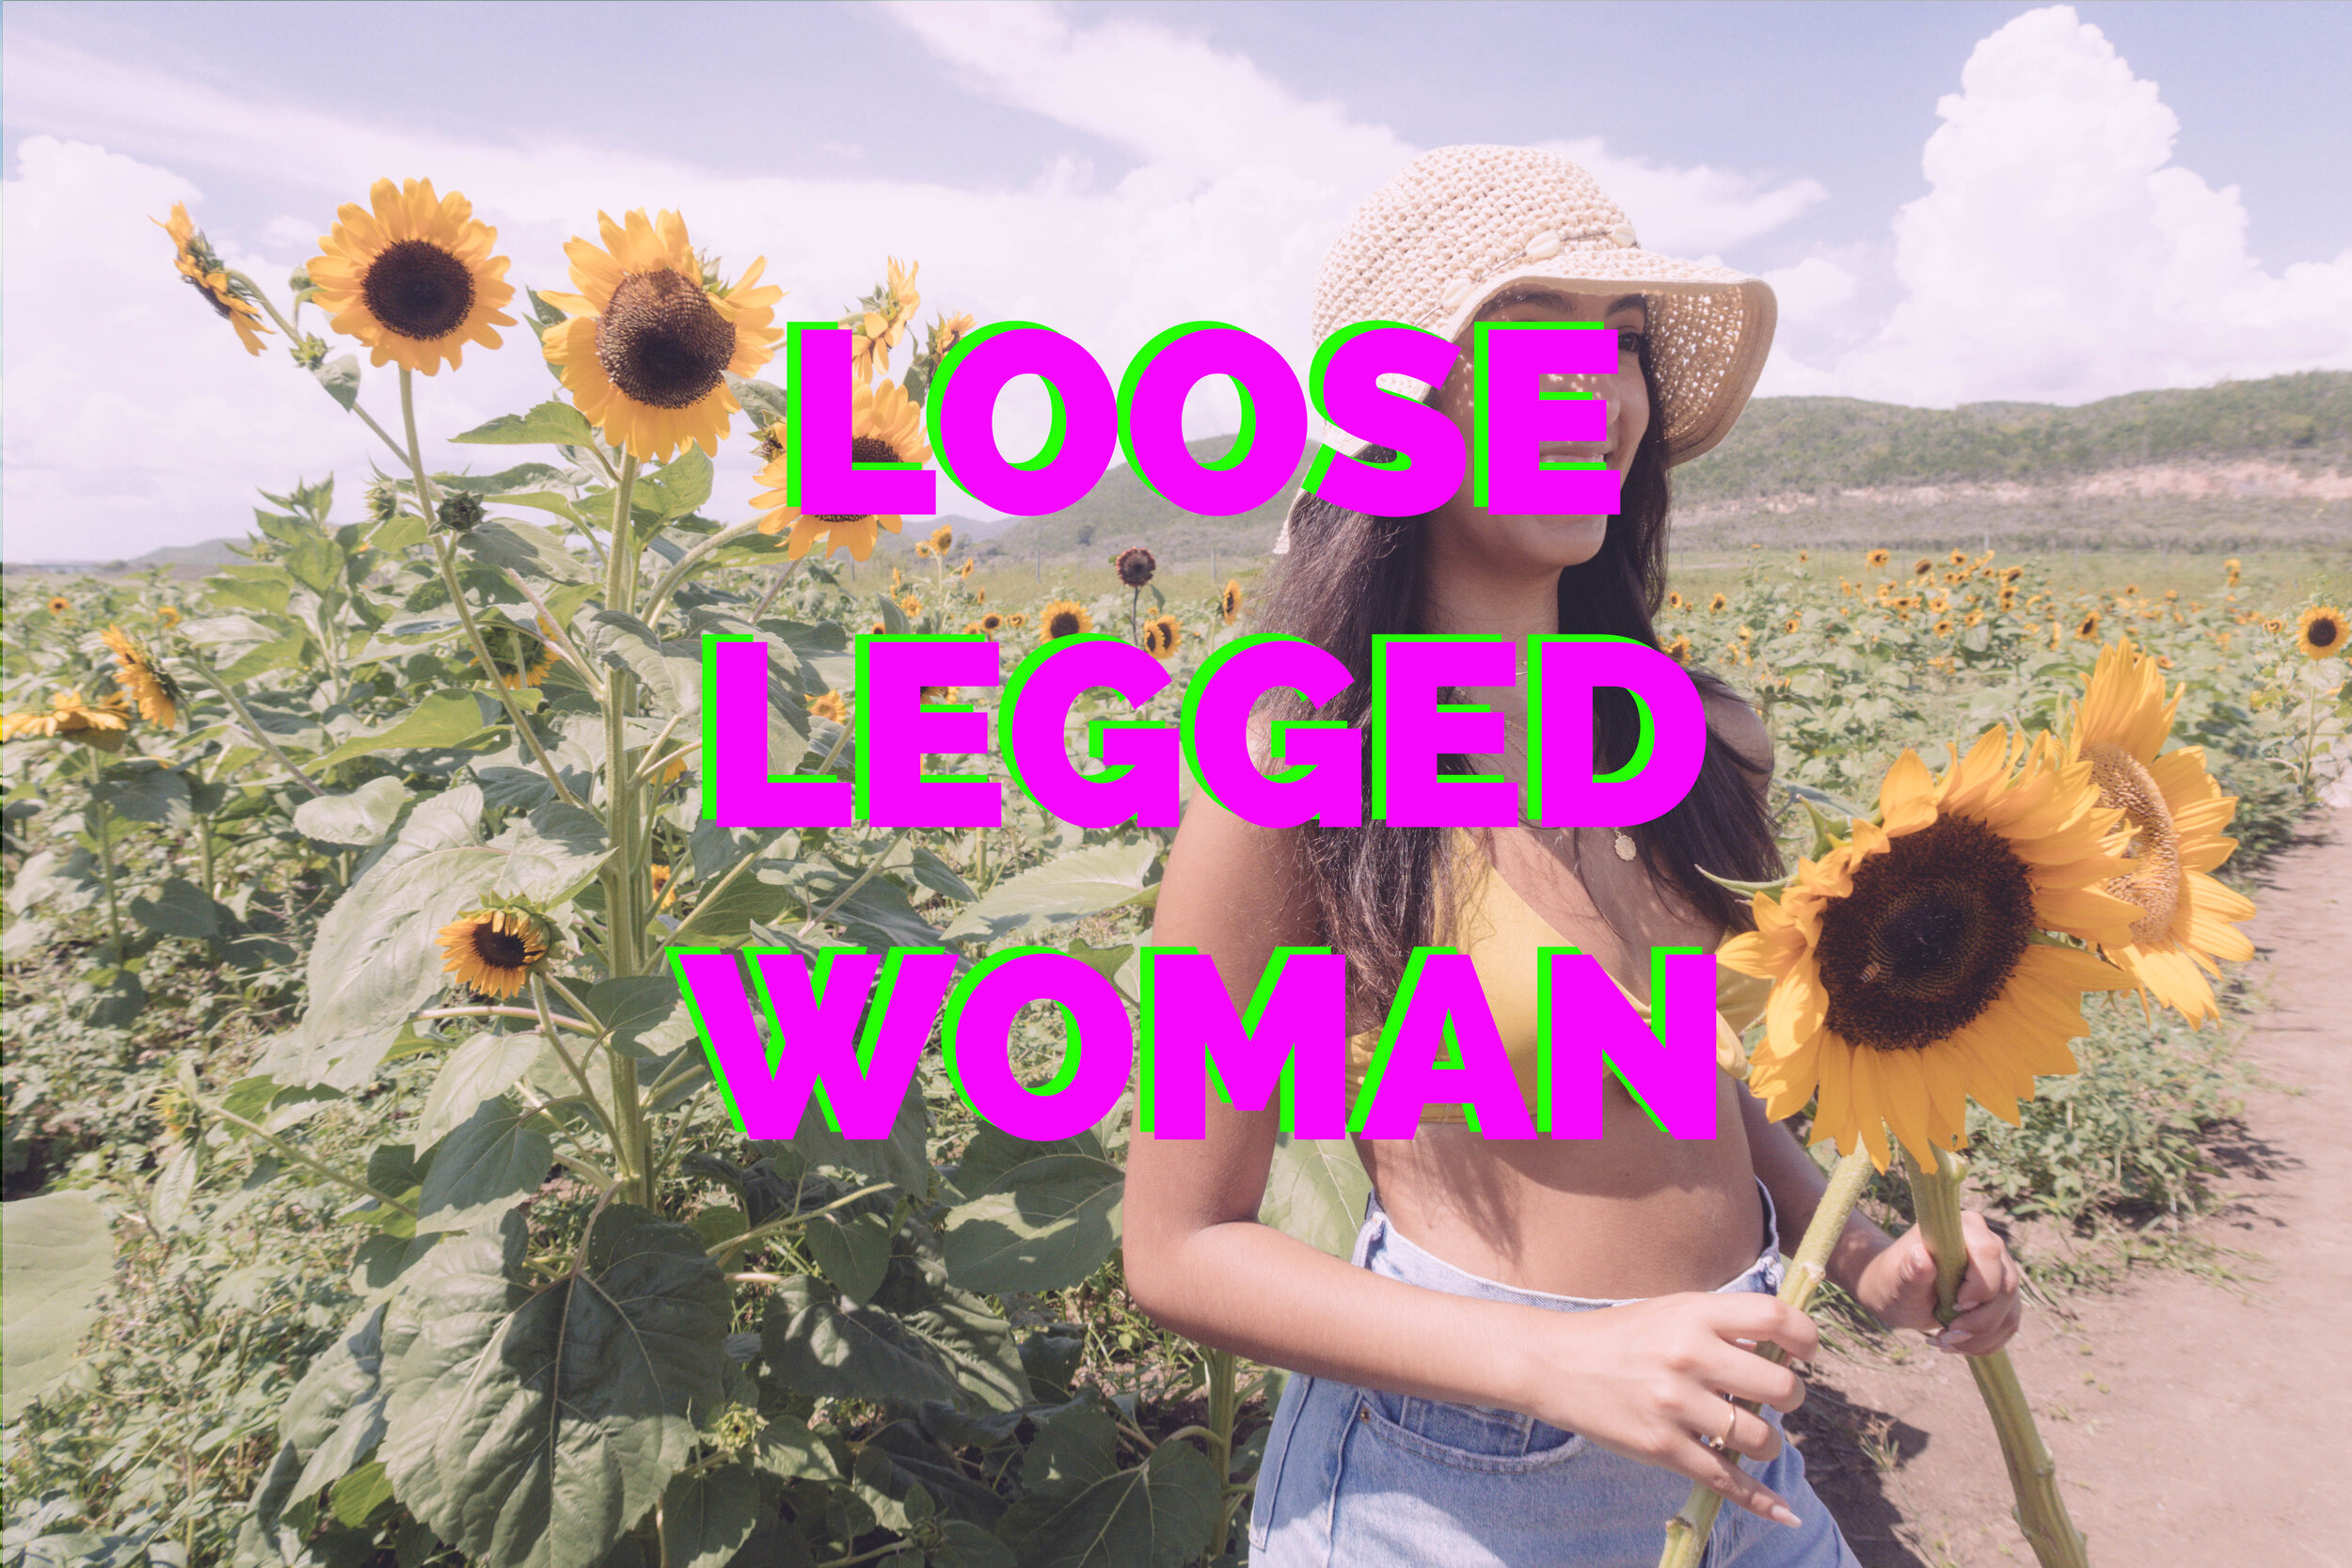 lOOSE-LEGGED-WOMAN-2.jpg